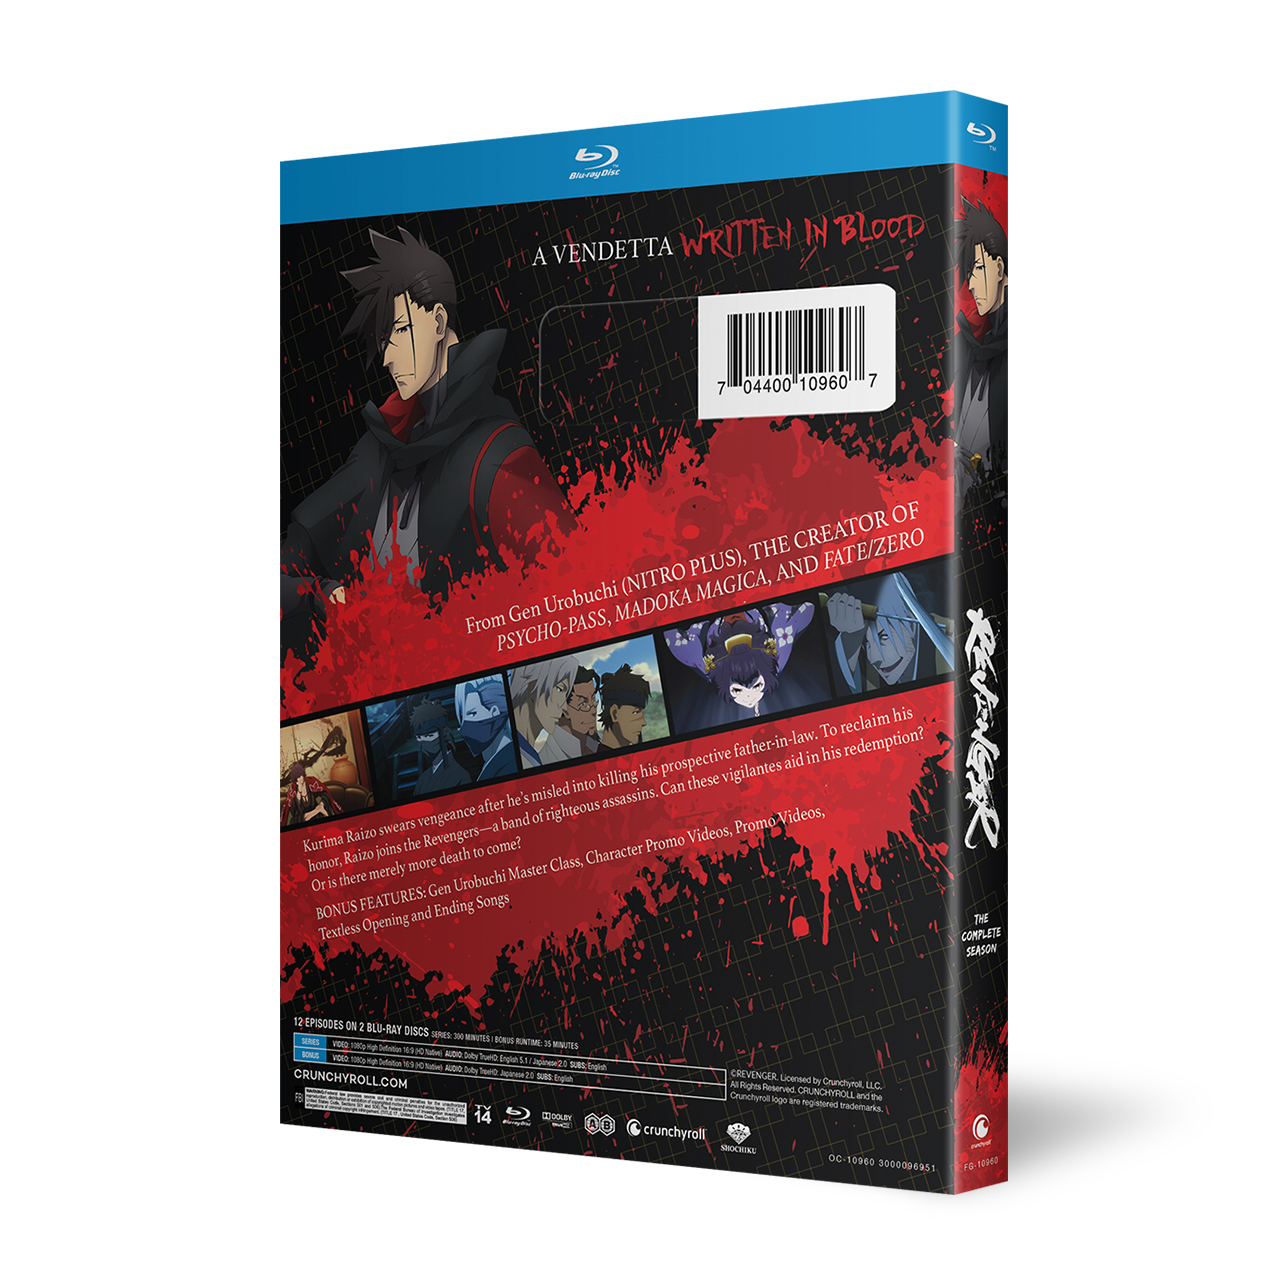 Best Buy: Tokyo Ravens: The Complete Series [Blu-ray]